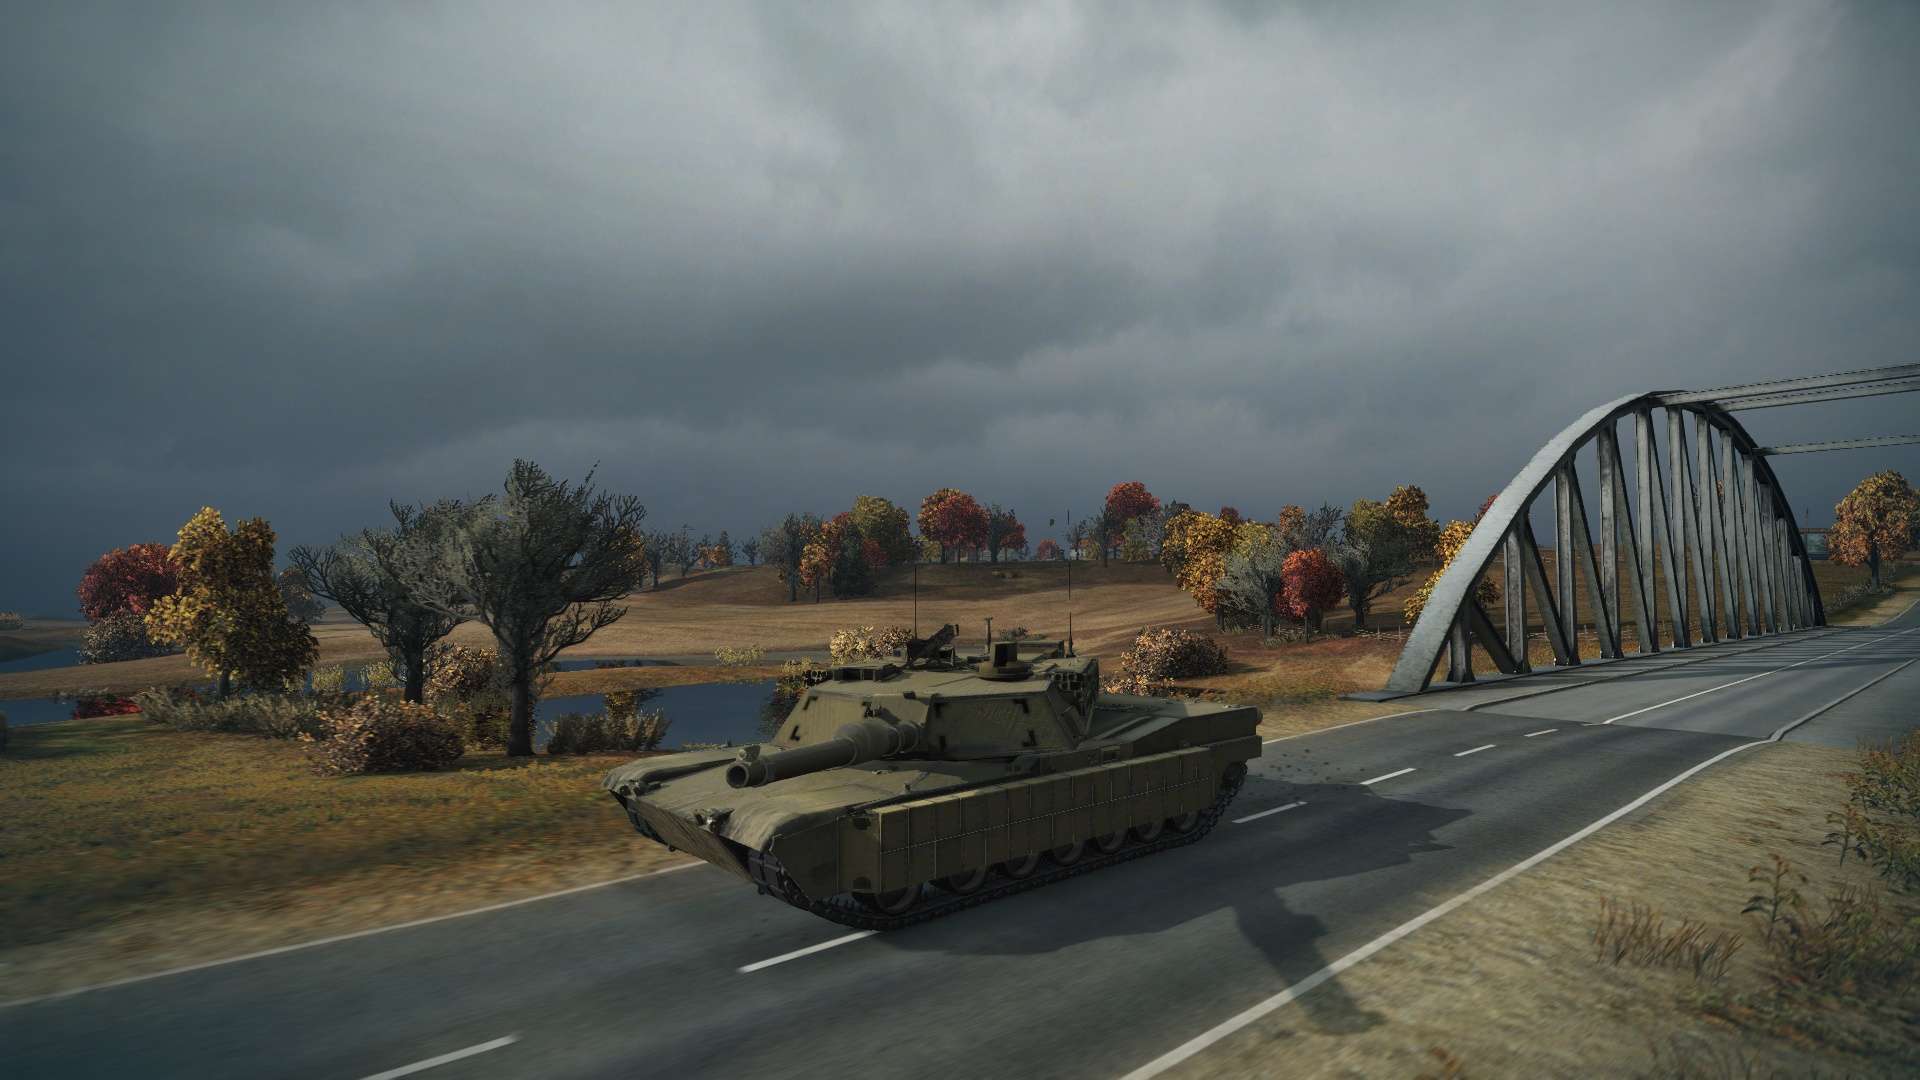 ww2 vs modern tanks